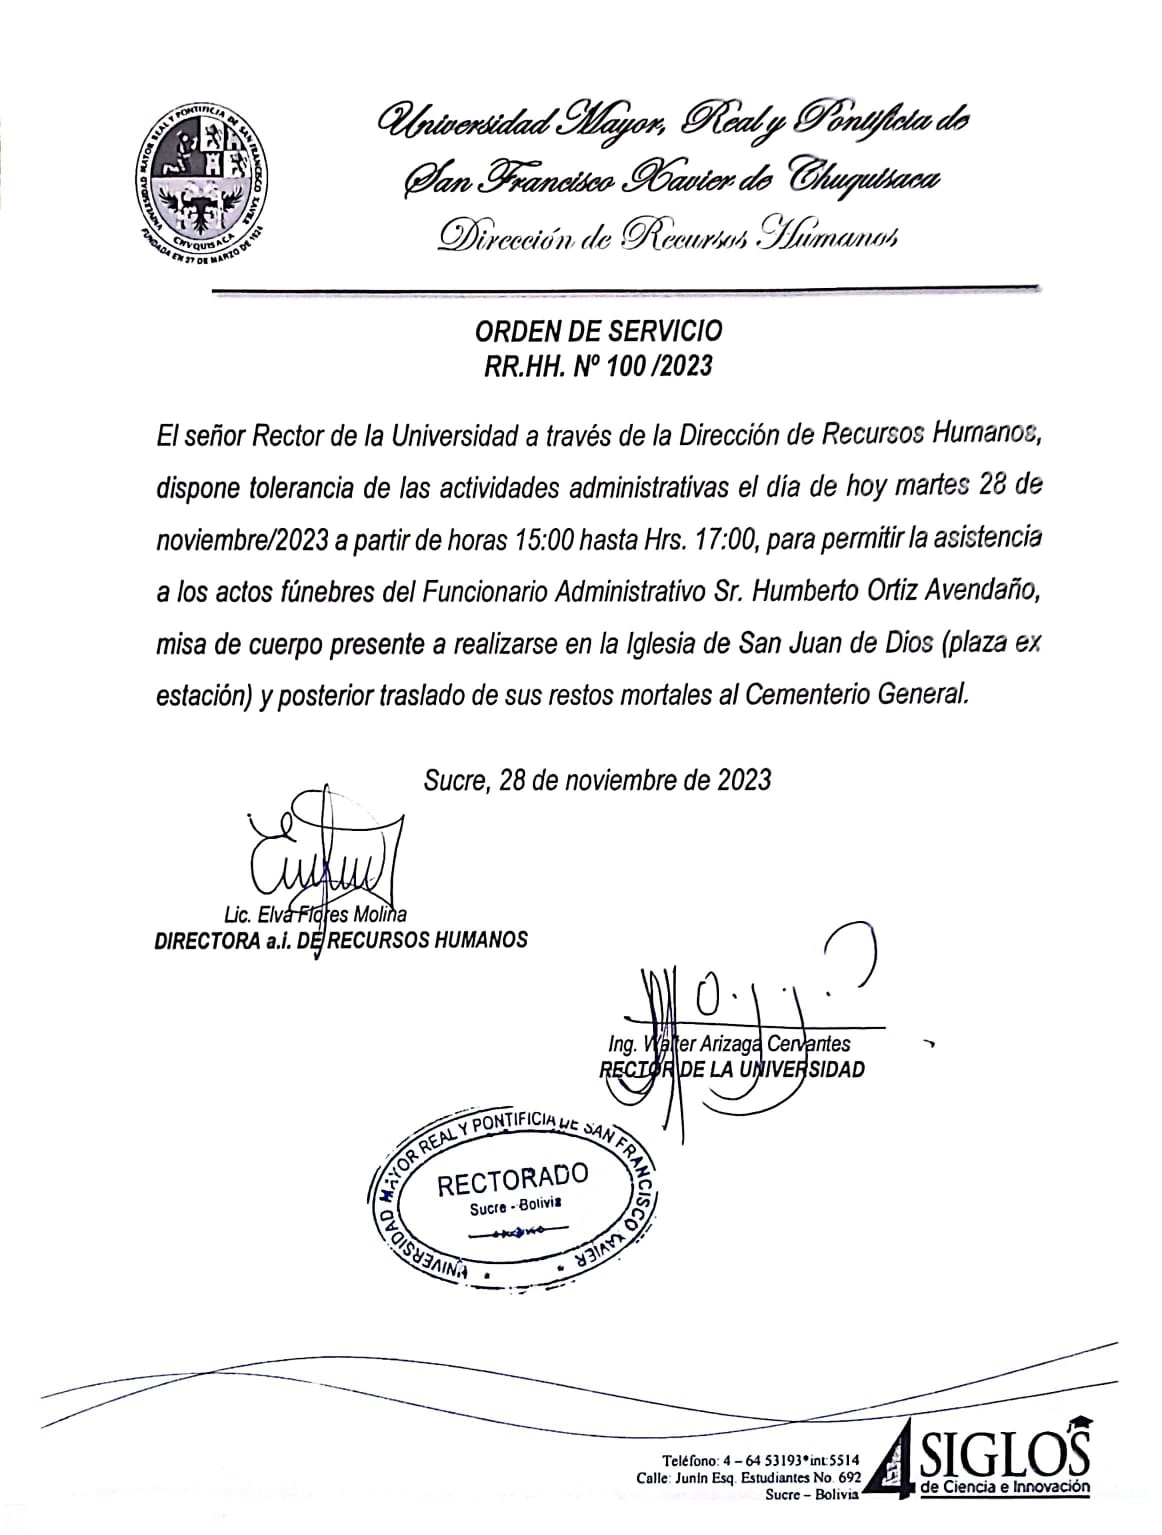 ORDEN DE SERVICIO RR.HH. Nº 100/2023, TOLERANCIA ACTIVIDADES ADMINISTRATIVAS.